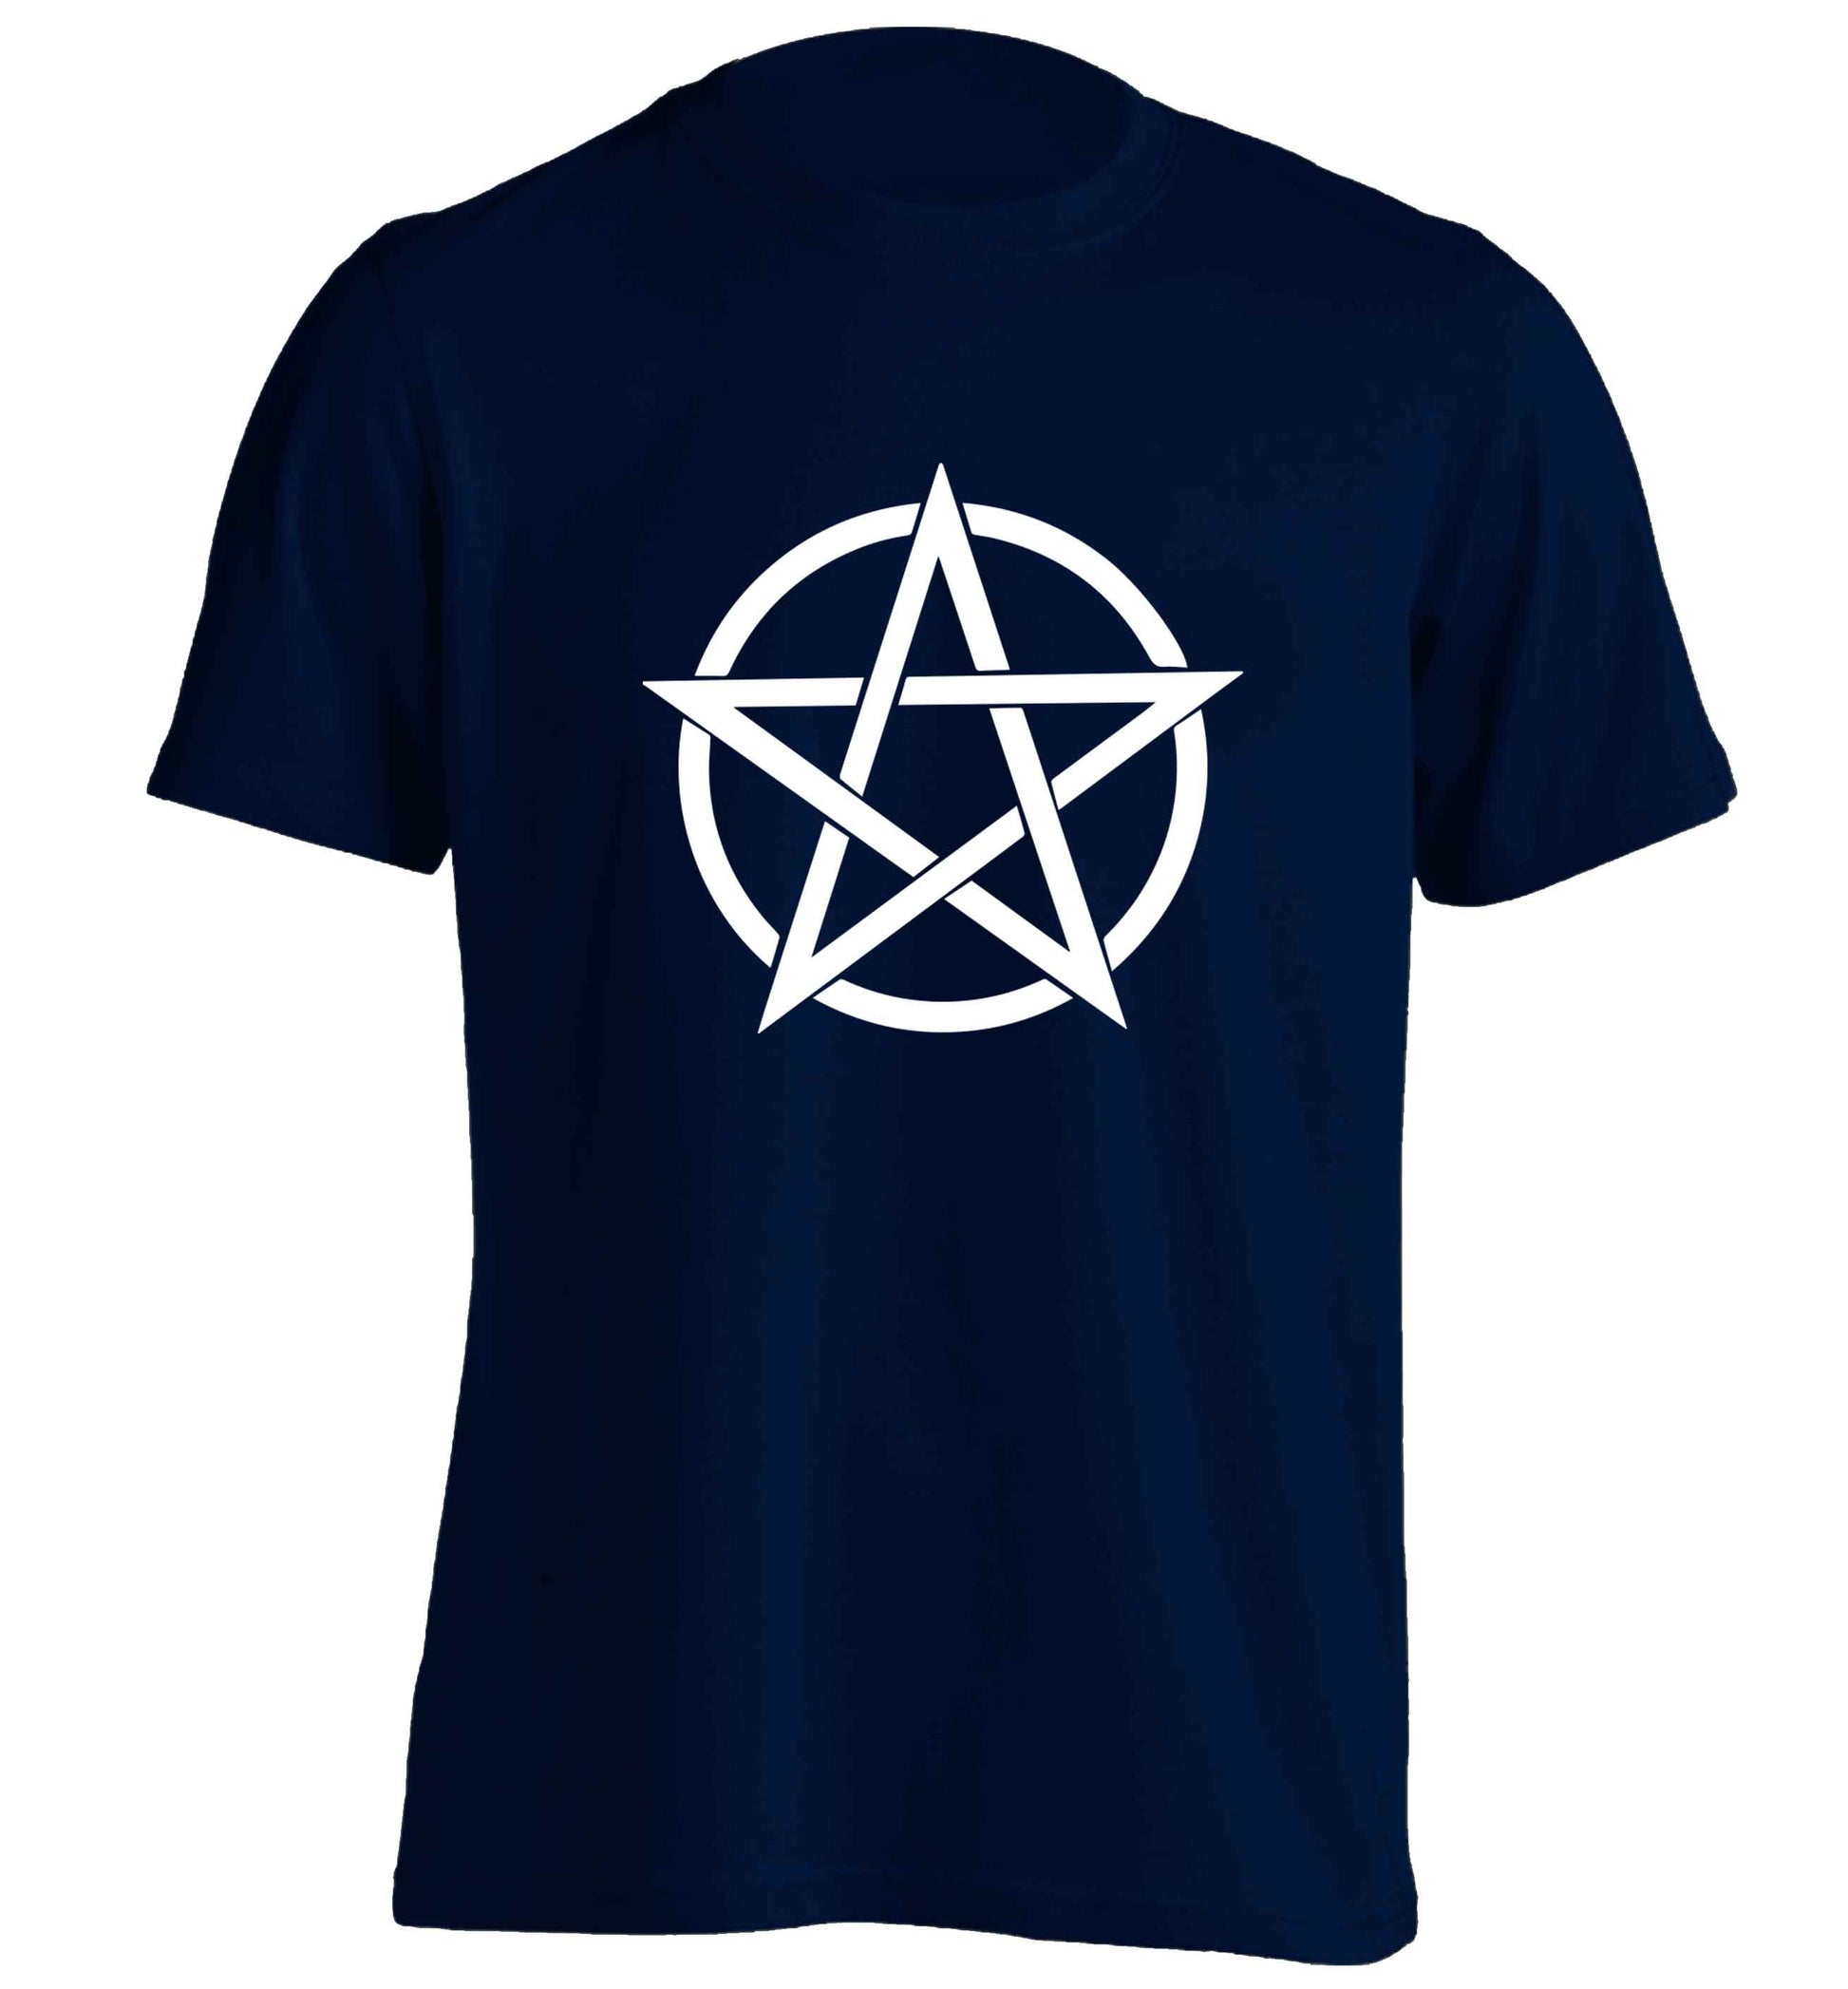 Pentagram symbol adults unisex navy Tshirt 2XL